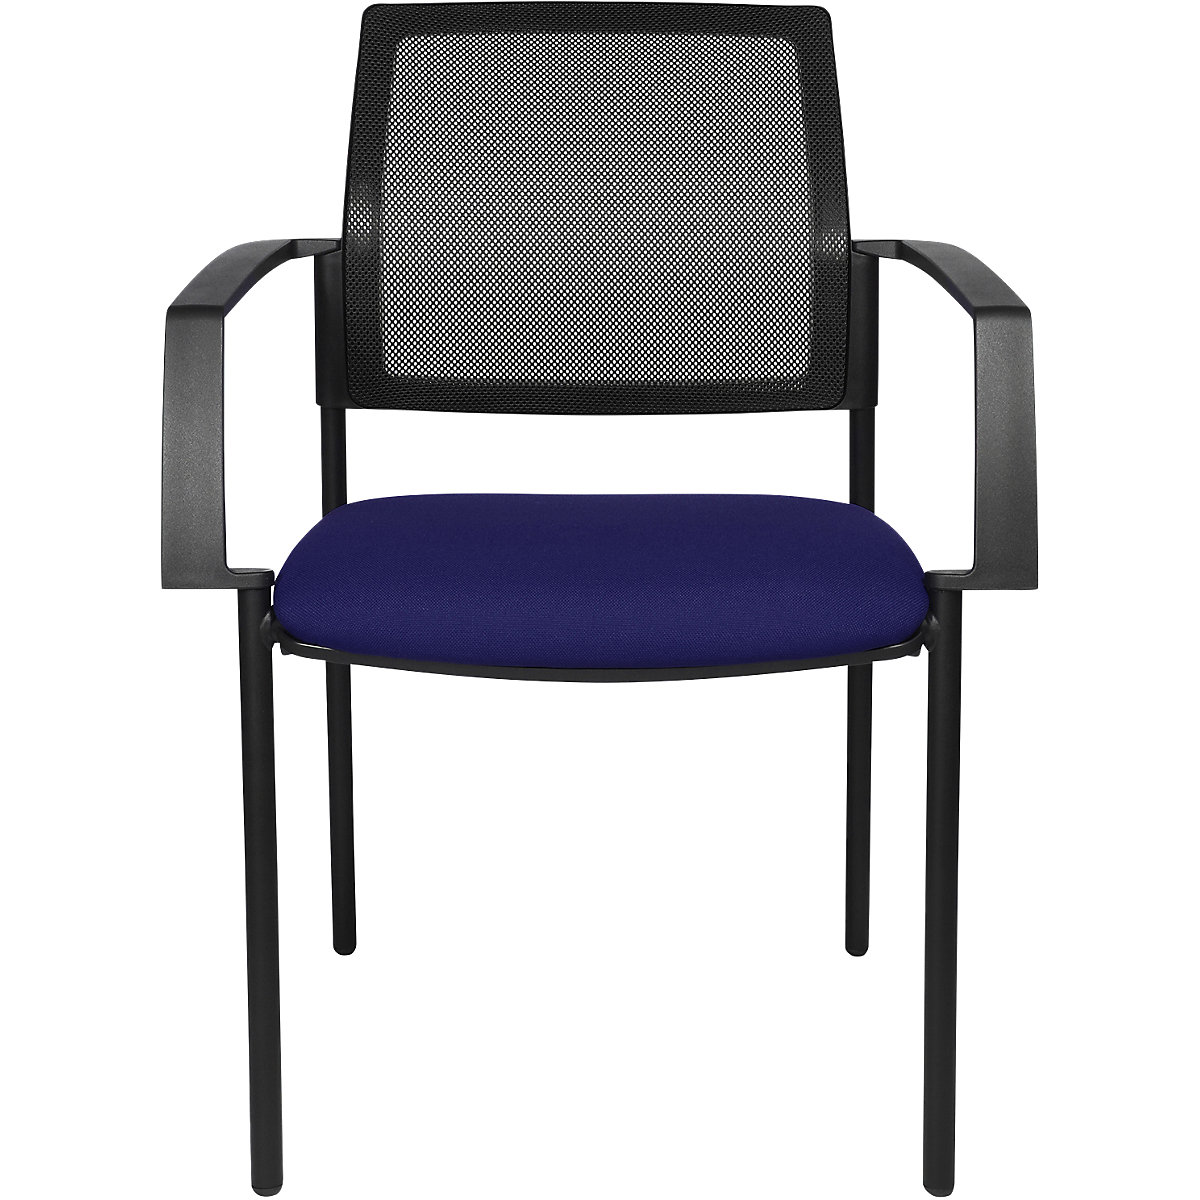 Mesh stacking chair - Topstar